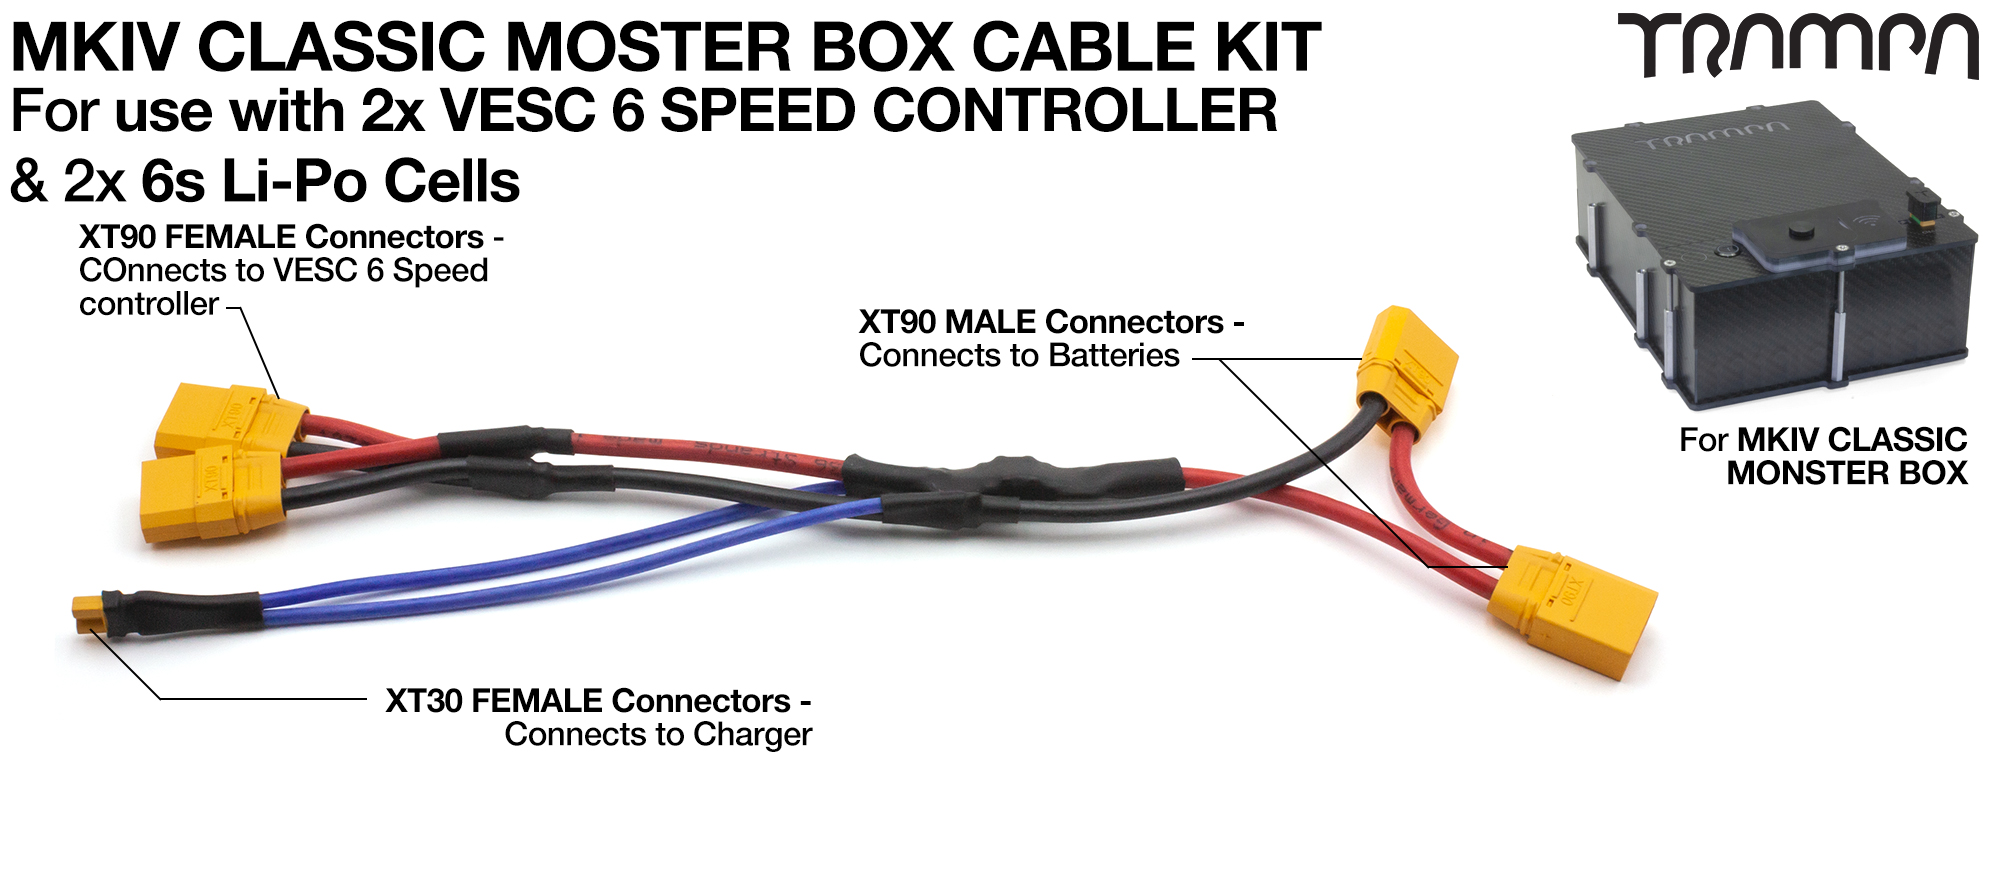 MASSIVE Monster Box cable kit for 2x VESC 6 using 2x Li-Po cells 